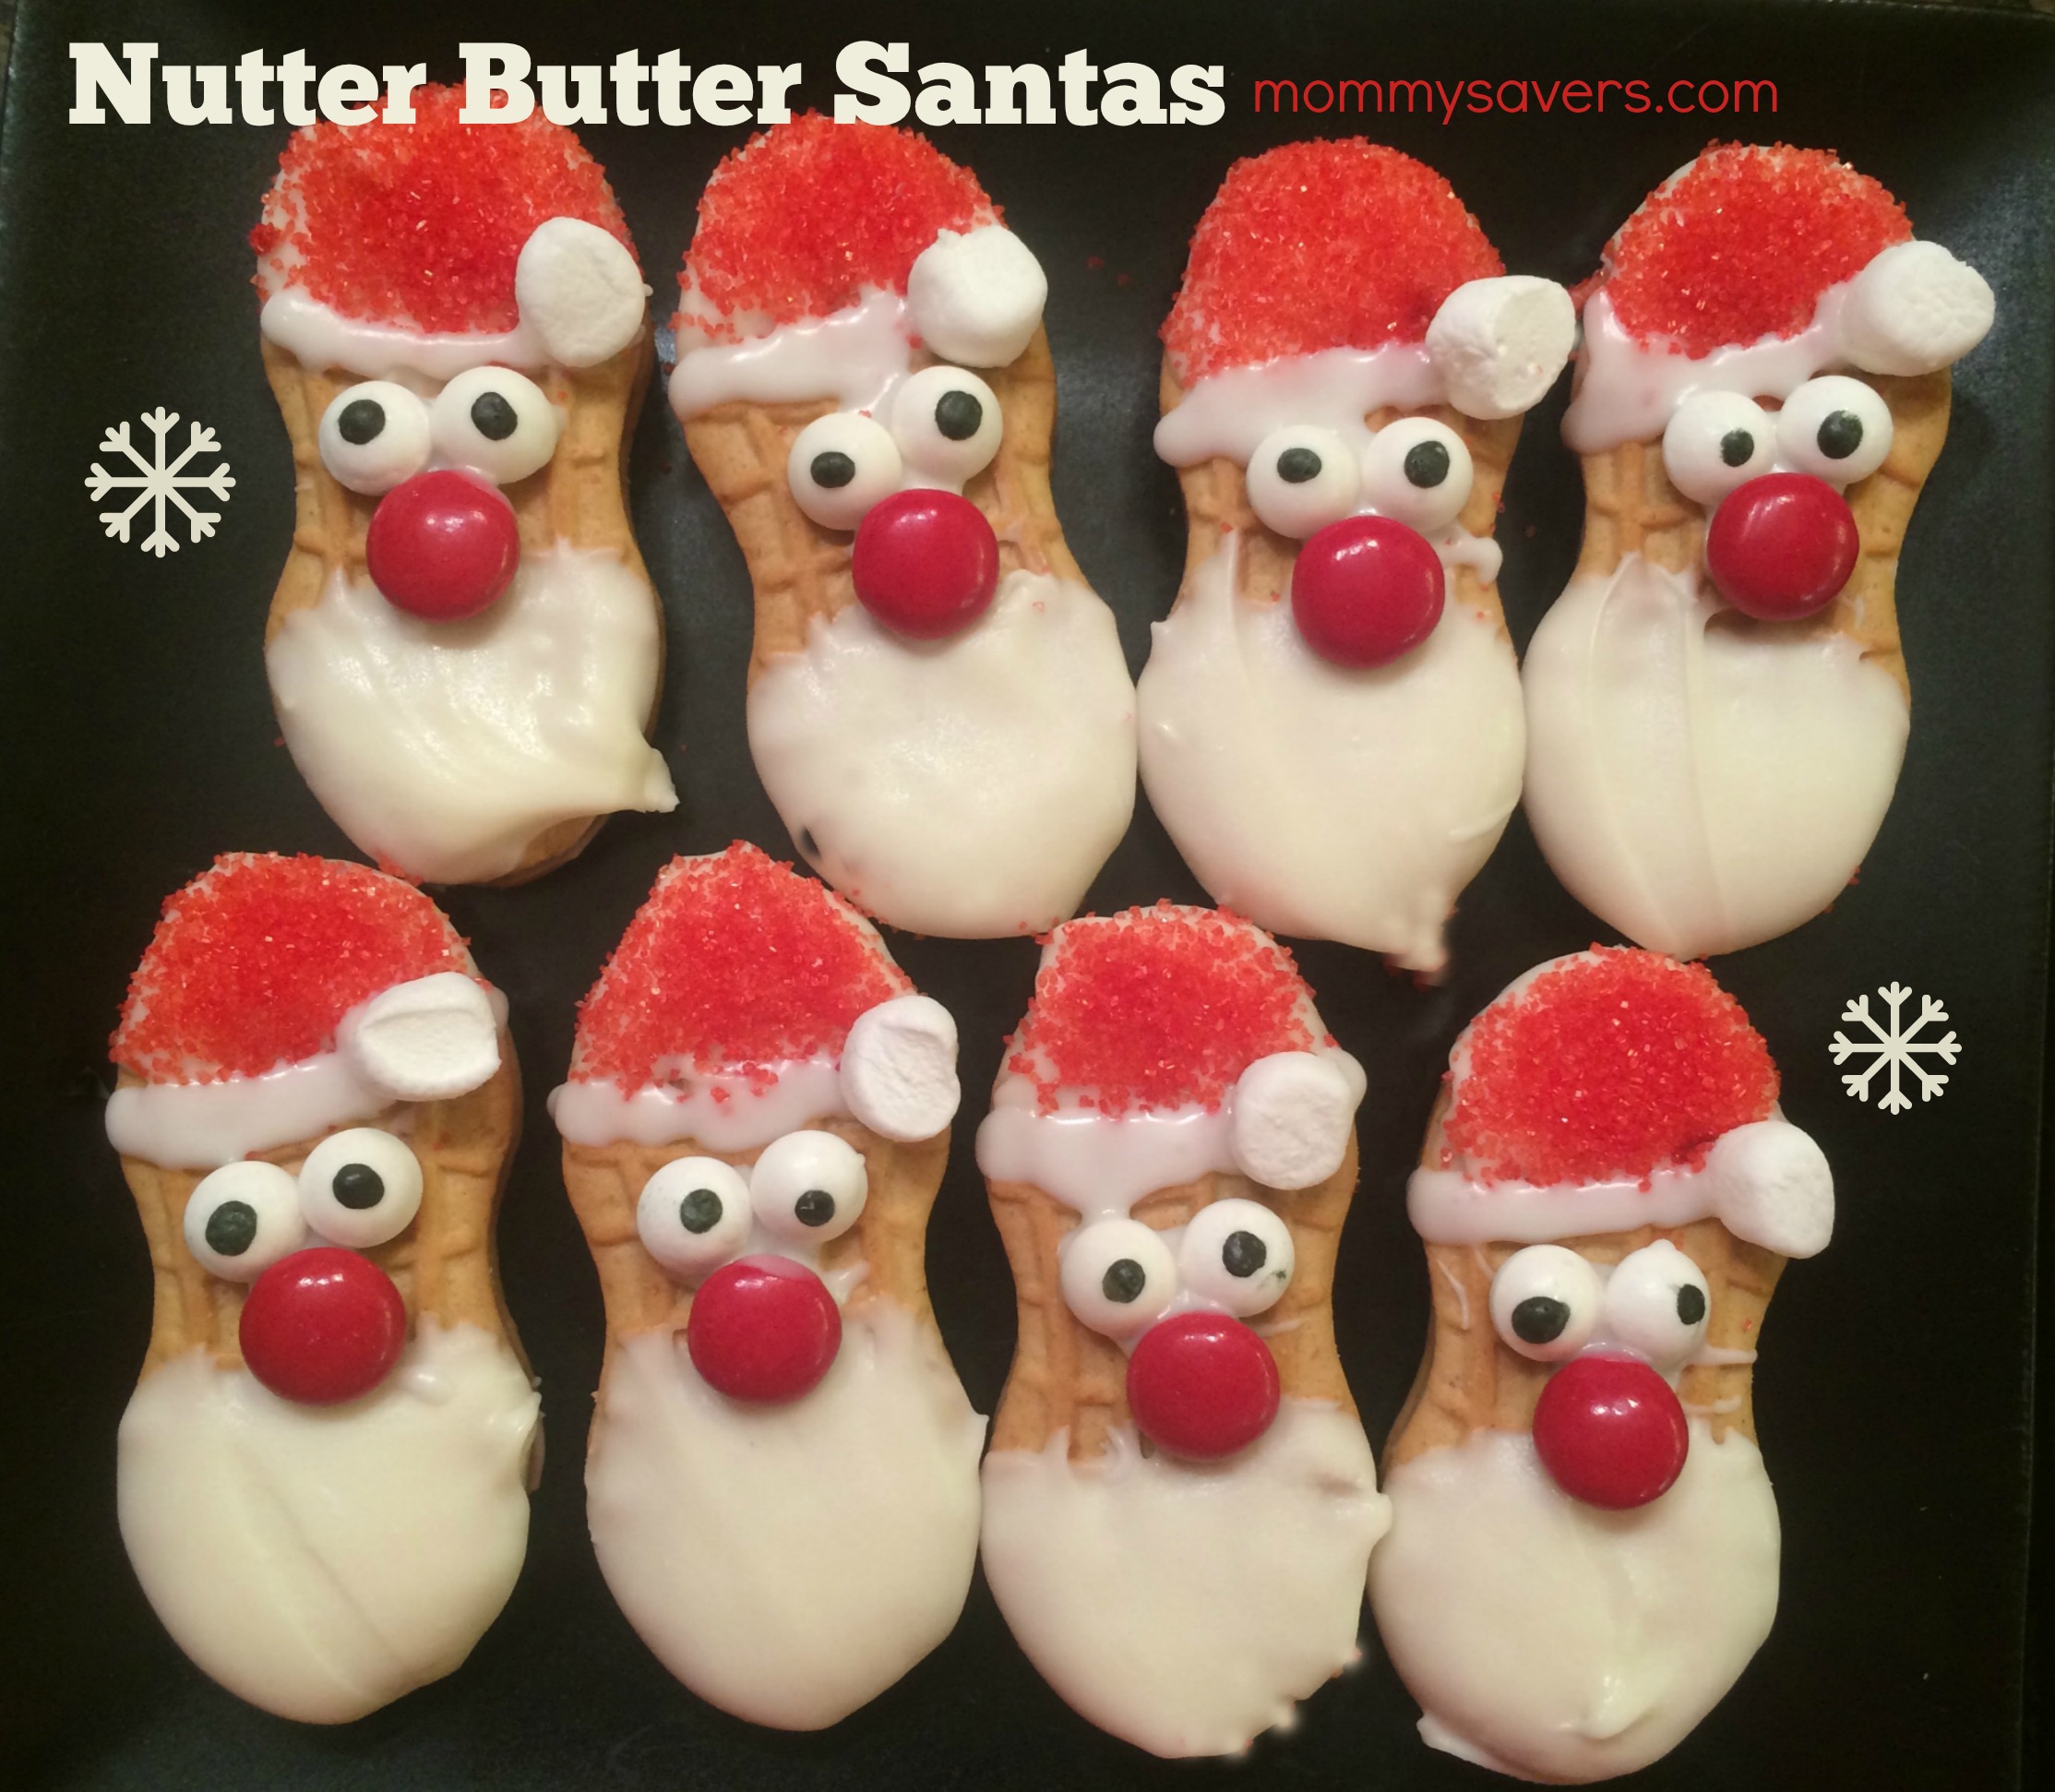 Nutter Butter Santas - Mommysavers